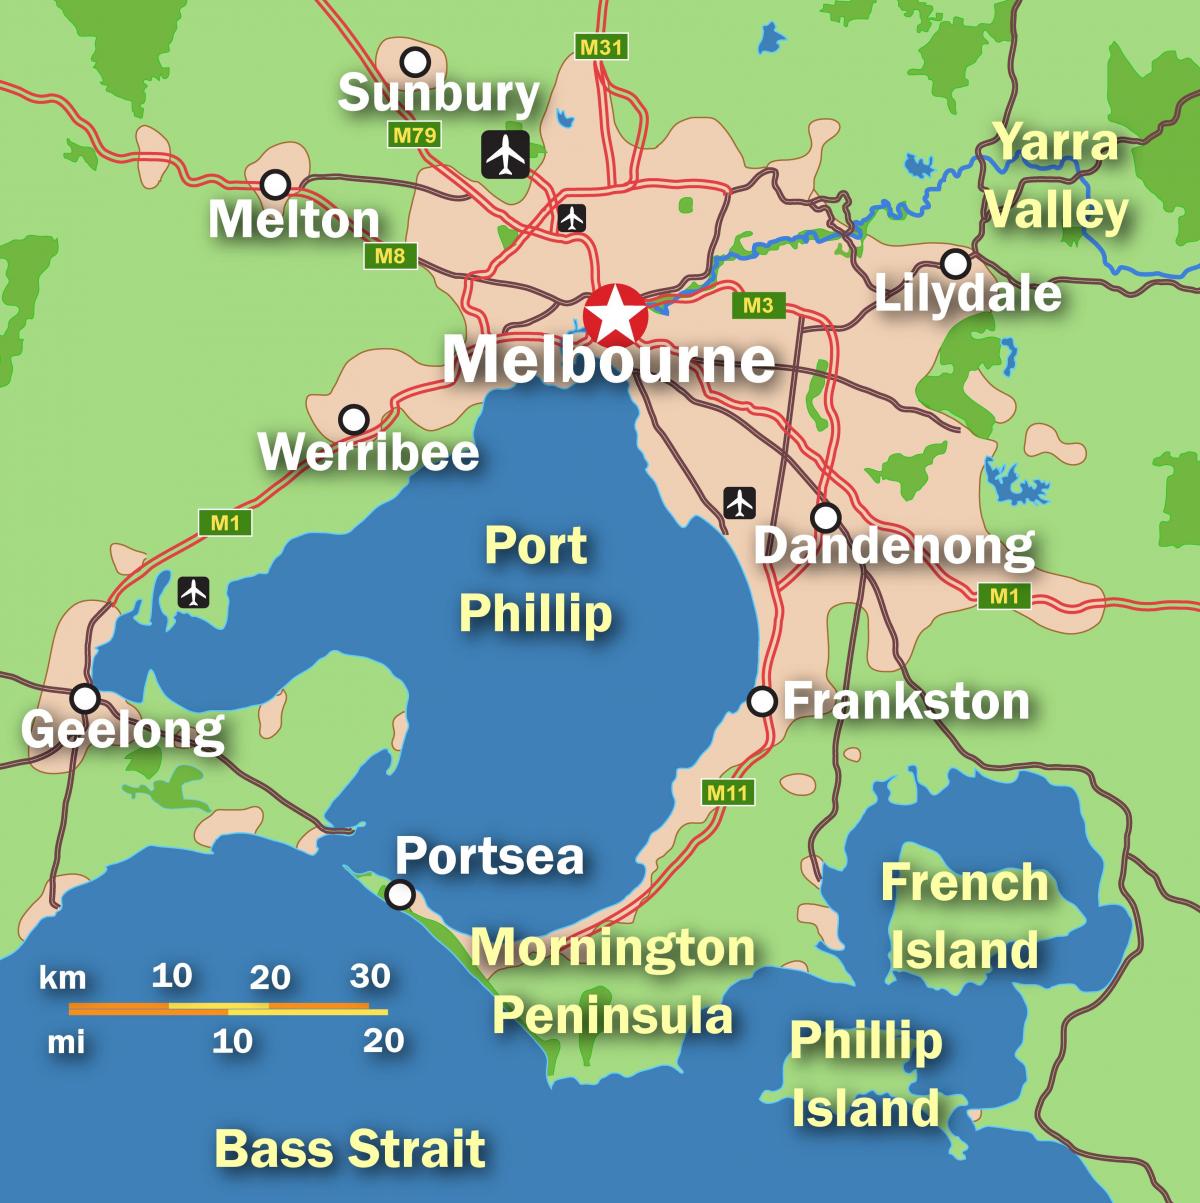 Карта города Мельбурн